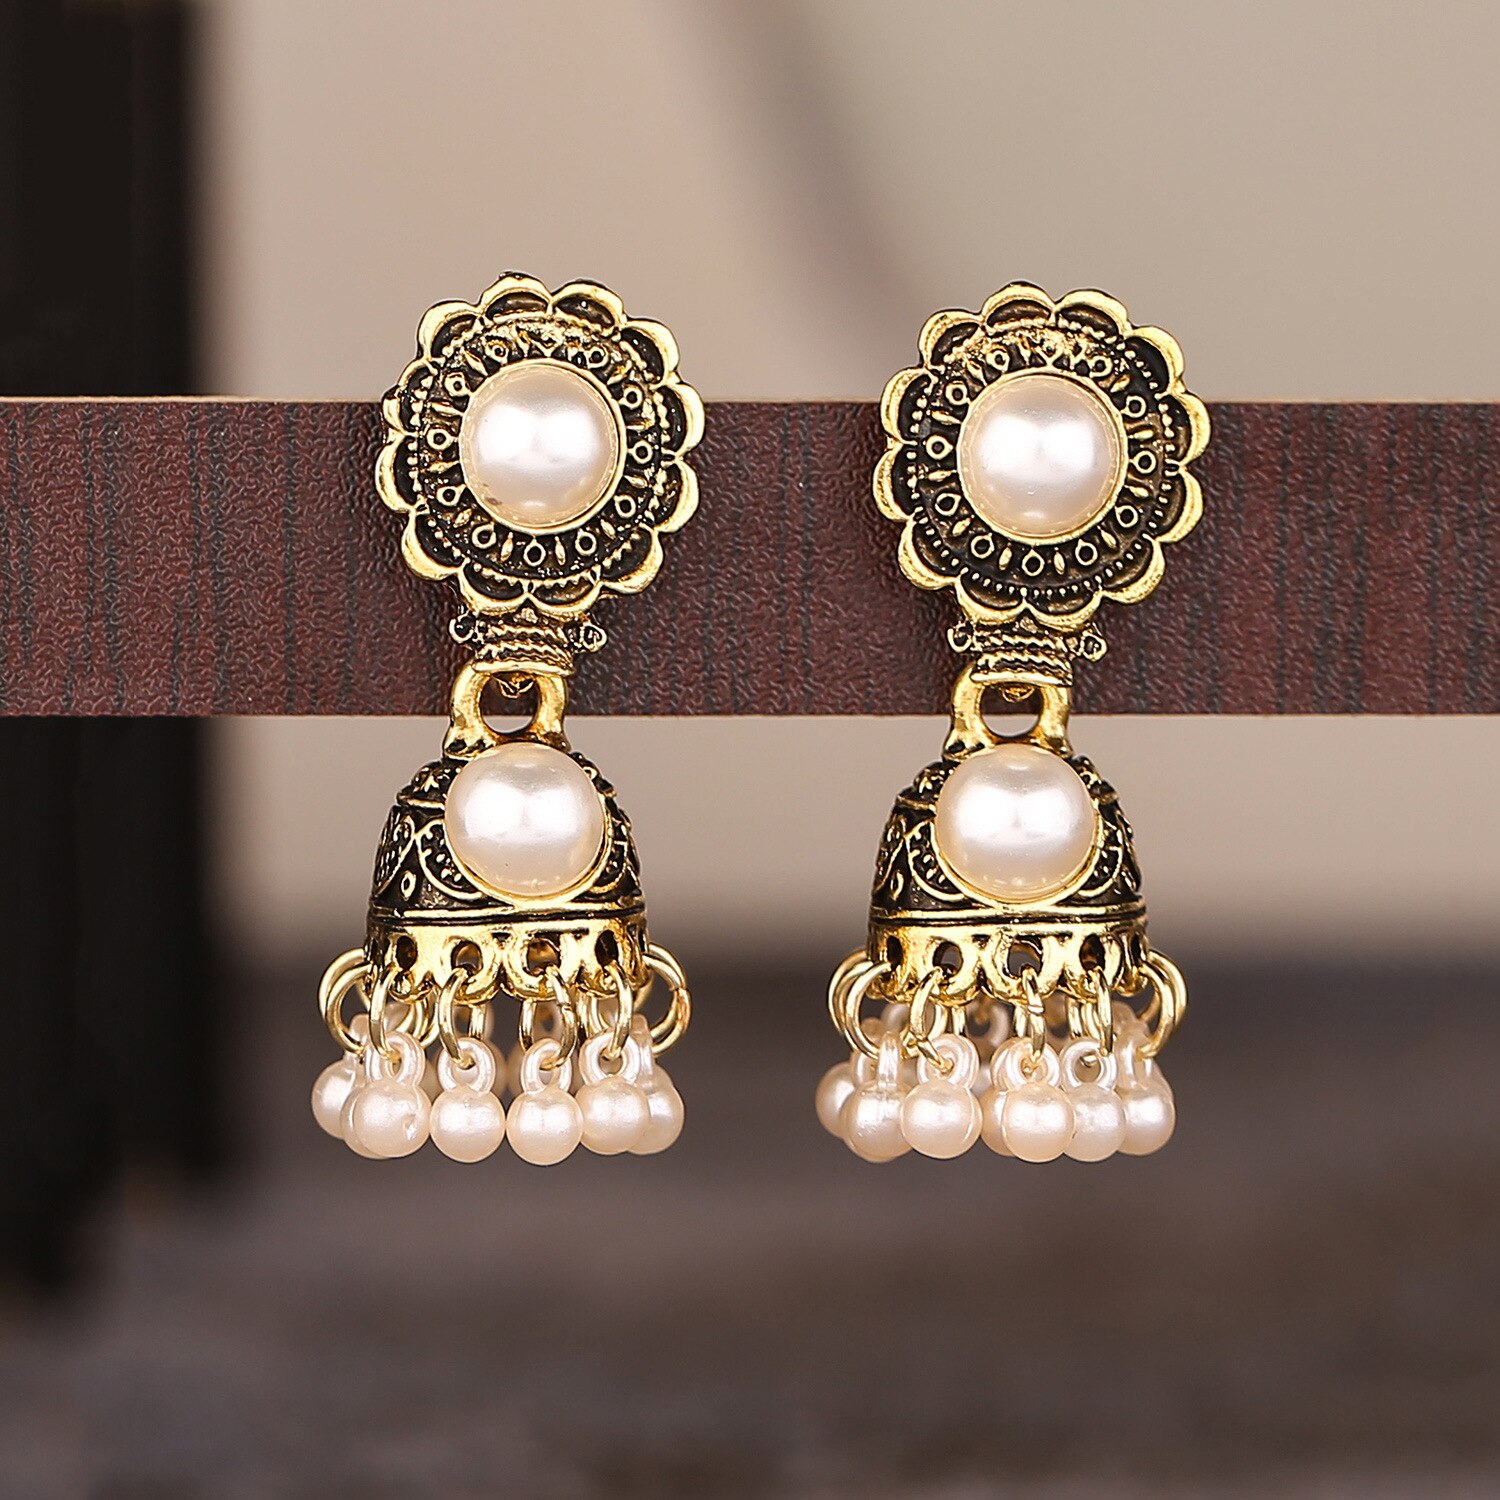 Ethnic-Gold-Color-Flower-Indian-Earrings-For-Women-Pendient-Vintage-Gyspy-Pearl-Ladies-Earring-Jewel-1005003740449342-3